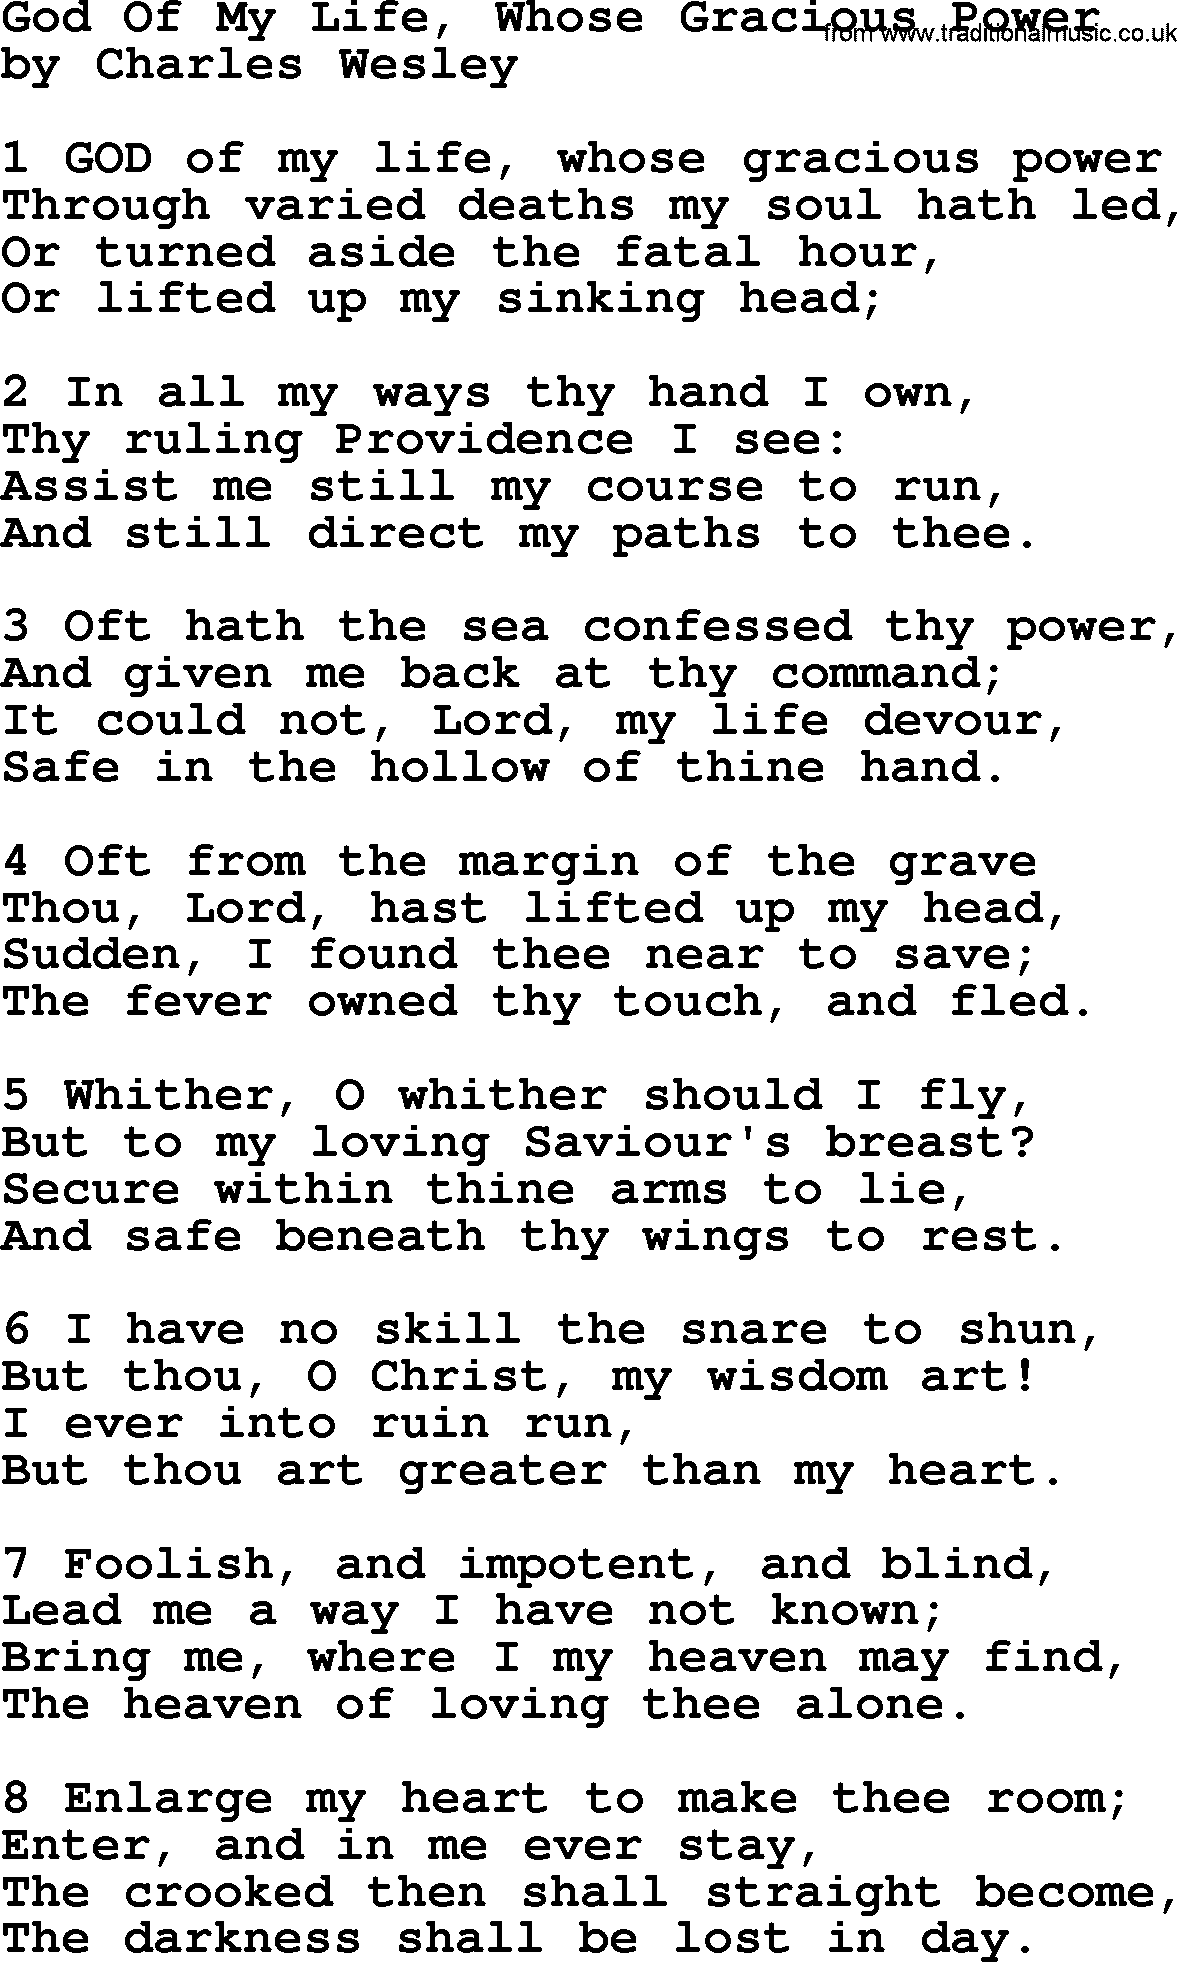 Charles Wesley hymn: God Of My Life, Whose Gracious Power, lyrics